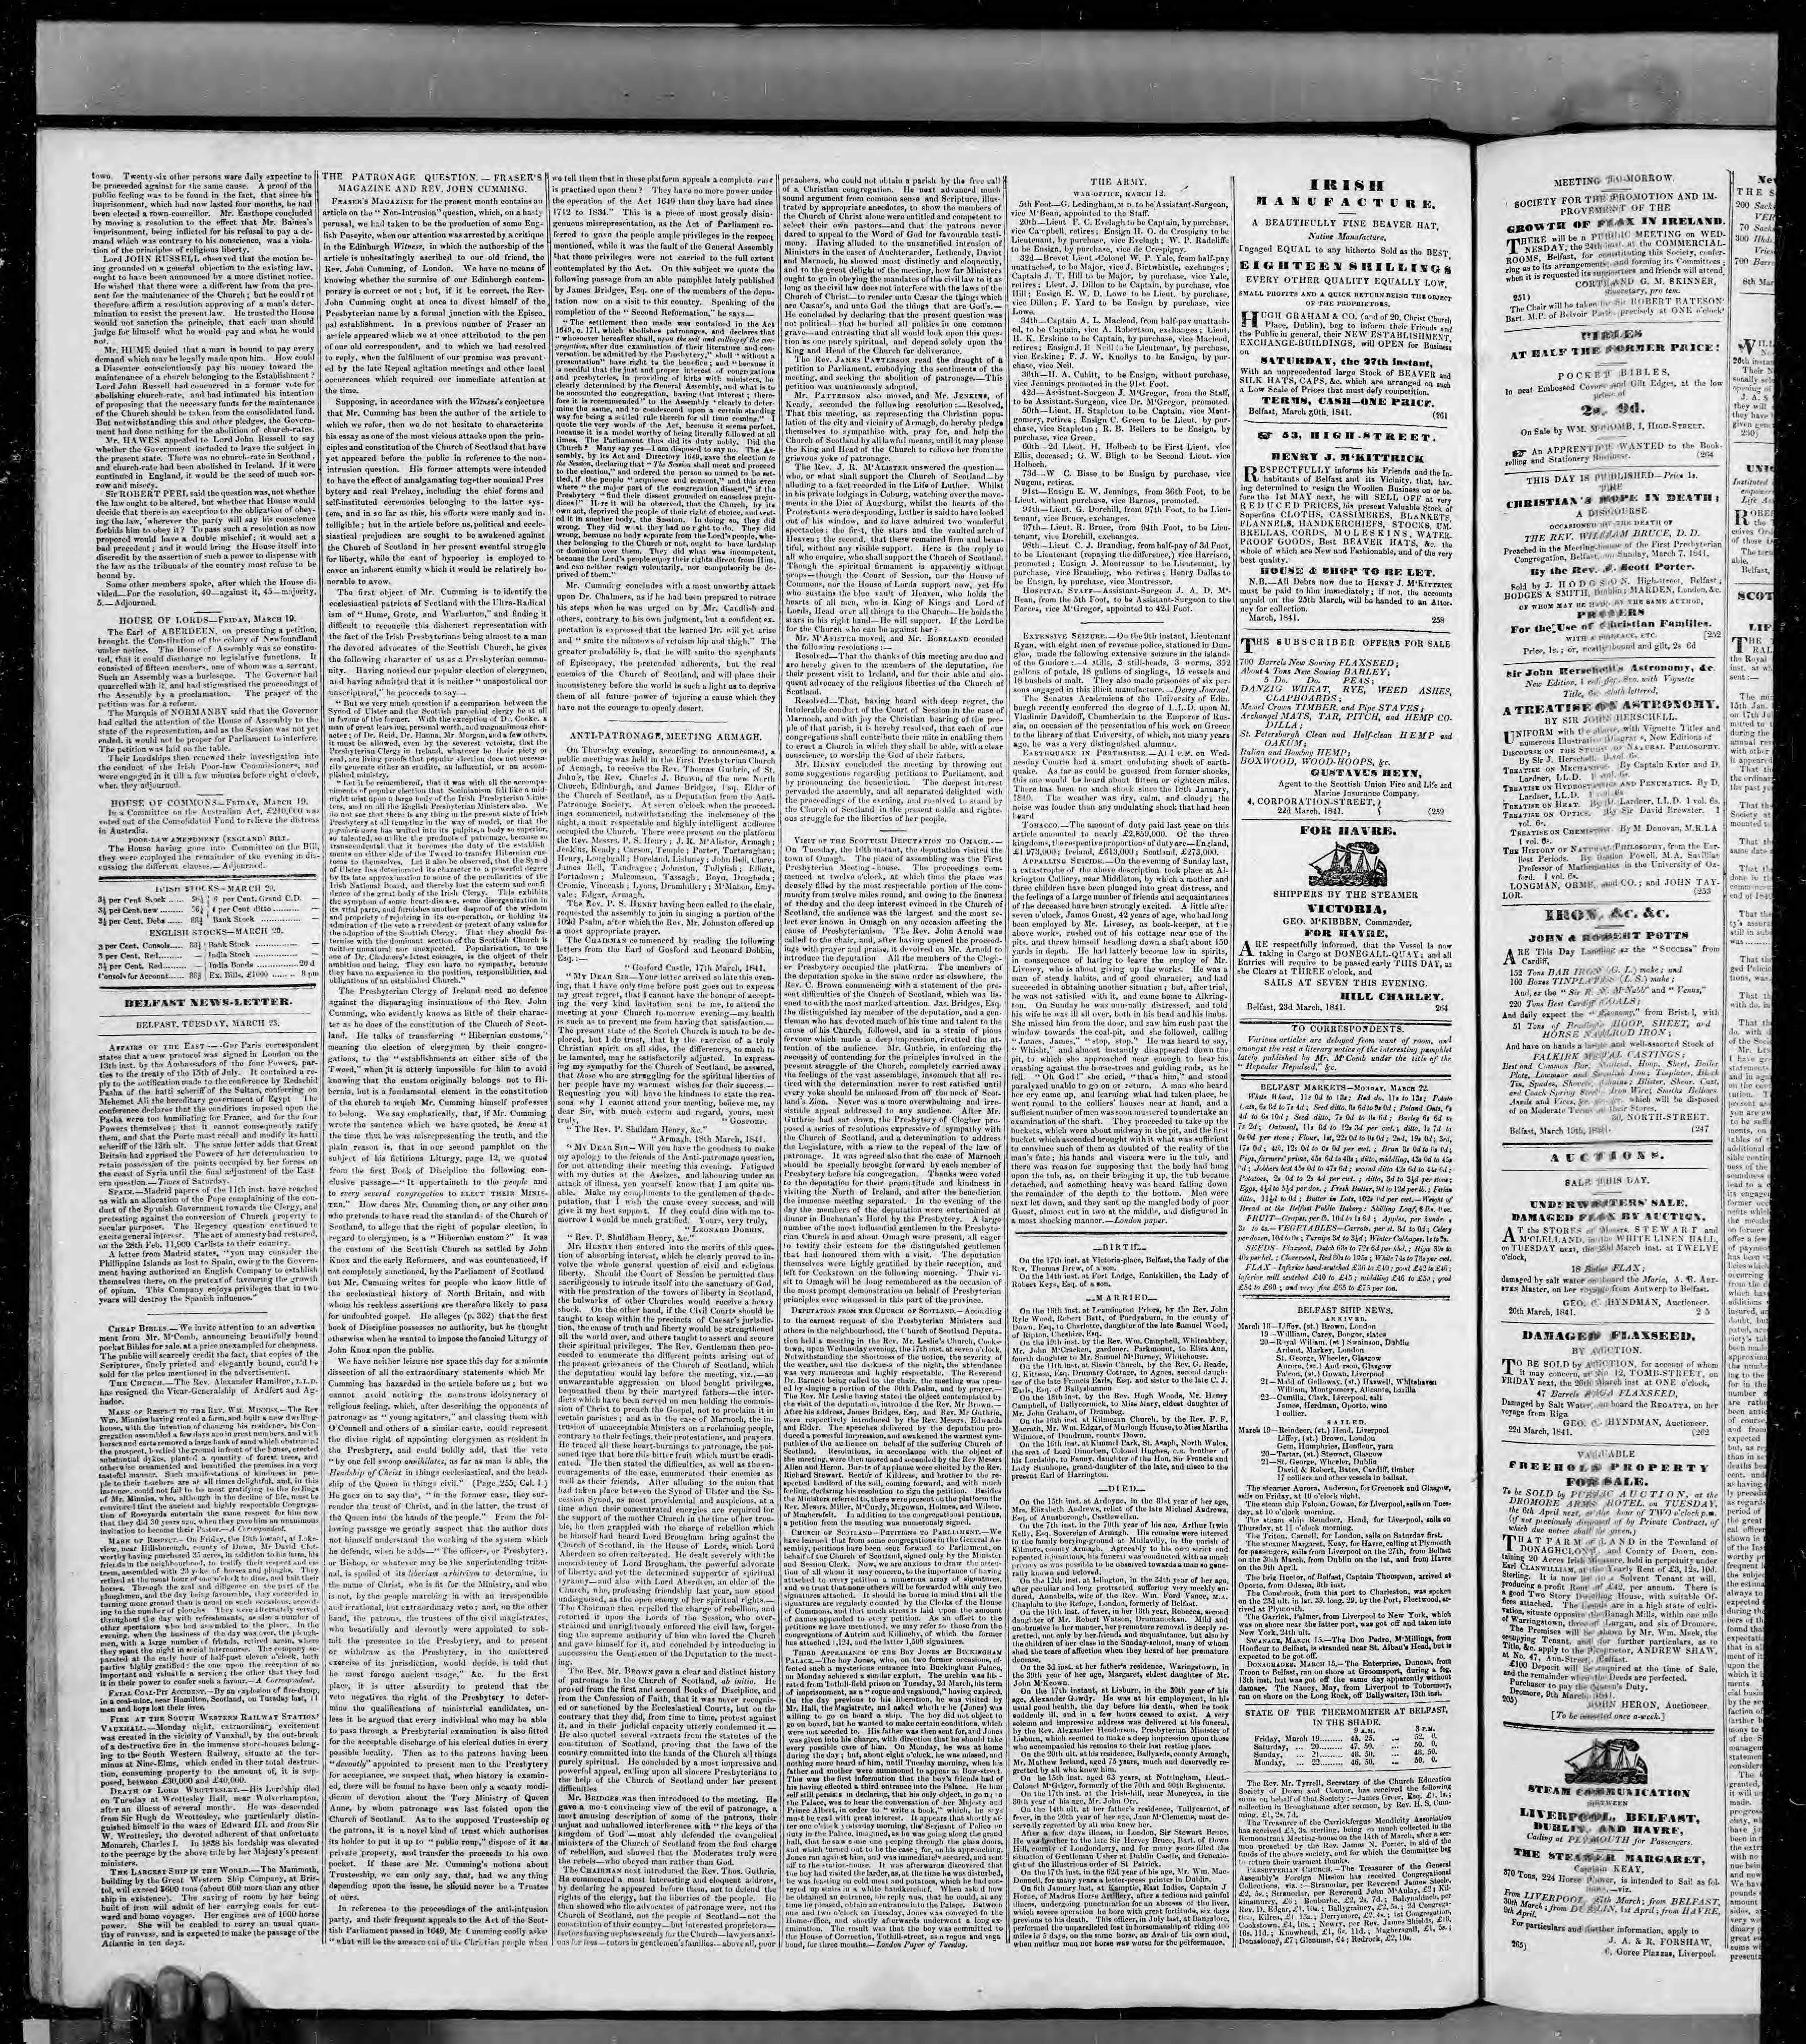 Belfast, Northern Ireland, The Belfast Newsletter (Birth, Marriage and Death Notices), 1738-1925